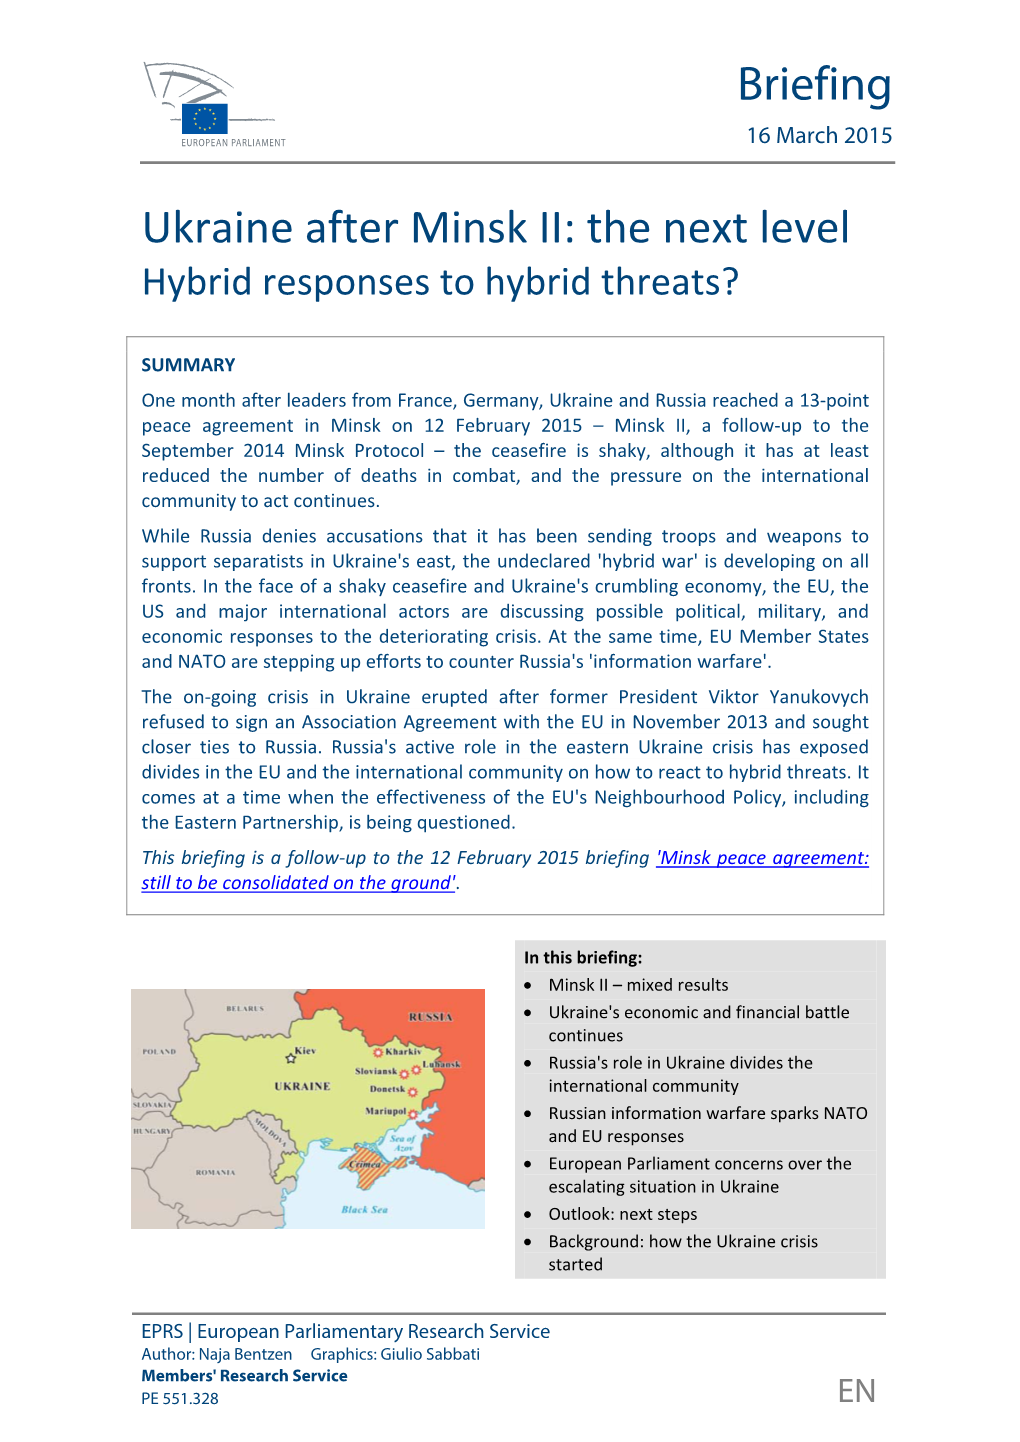 Ukraine After Minsk II: the Next Level Hybrid Responses to Hybrid Threats?